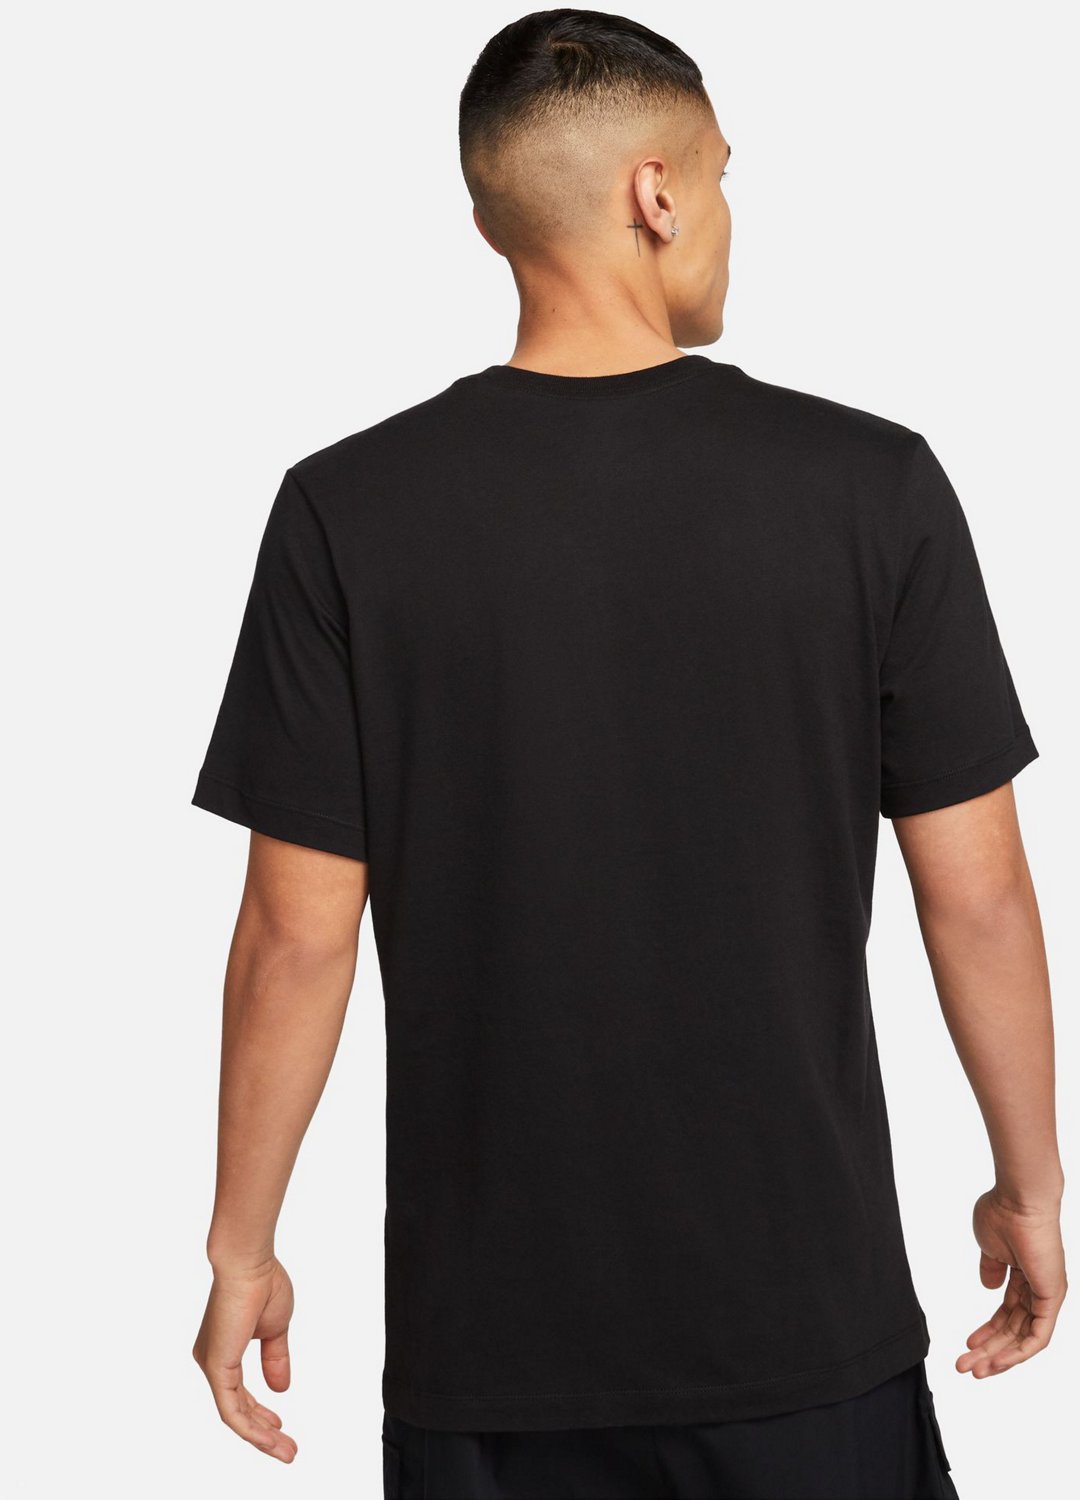 Nike Men's Sportswear T-shirt | Free Shipping at Academy